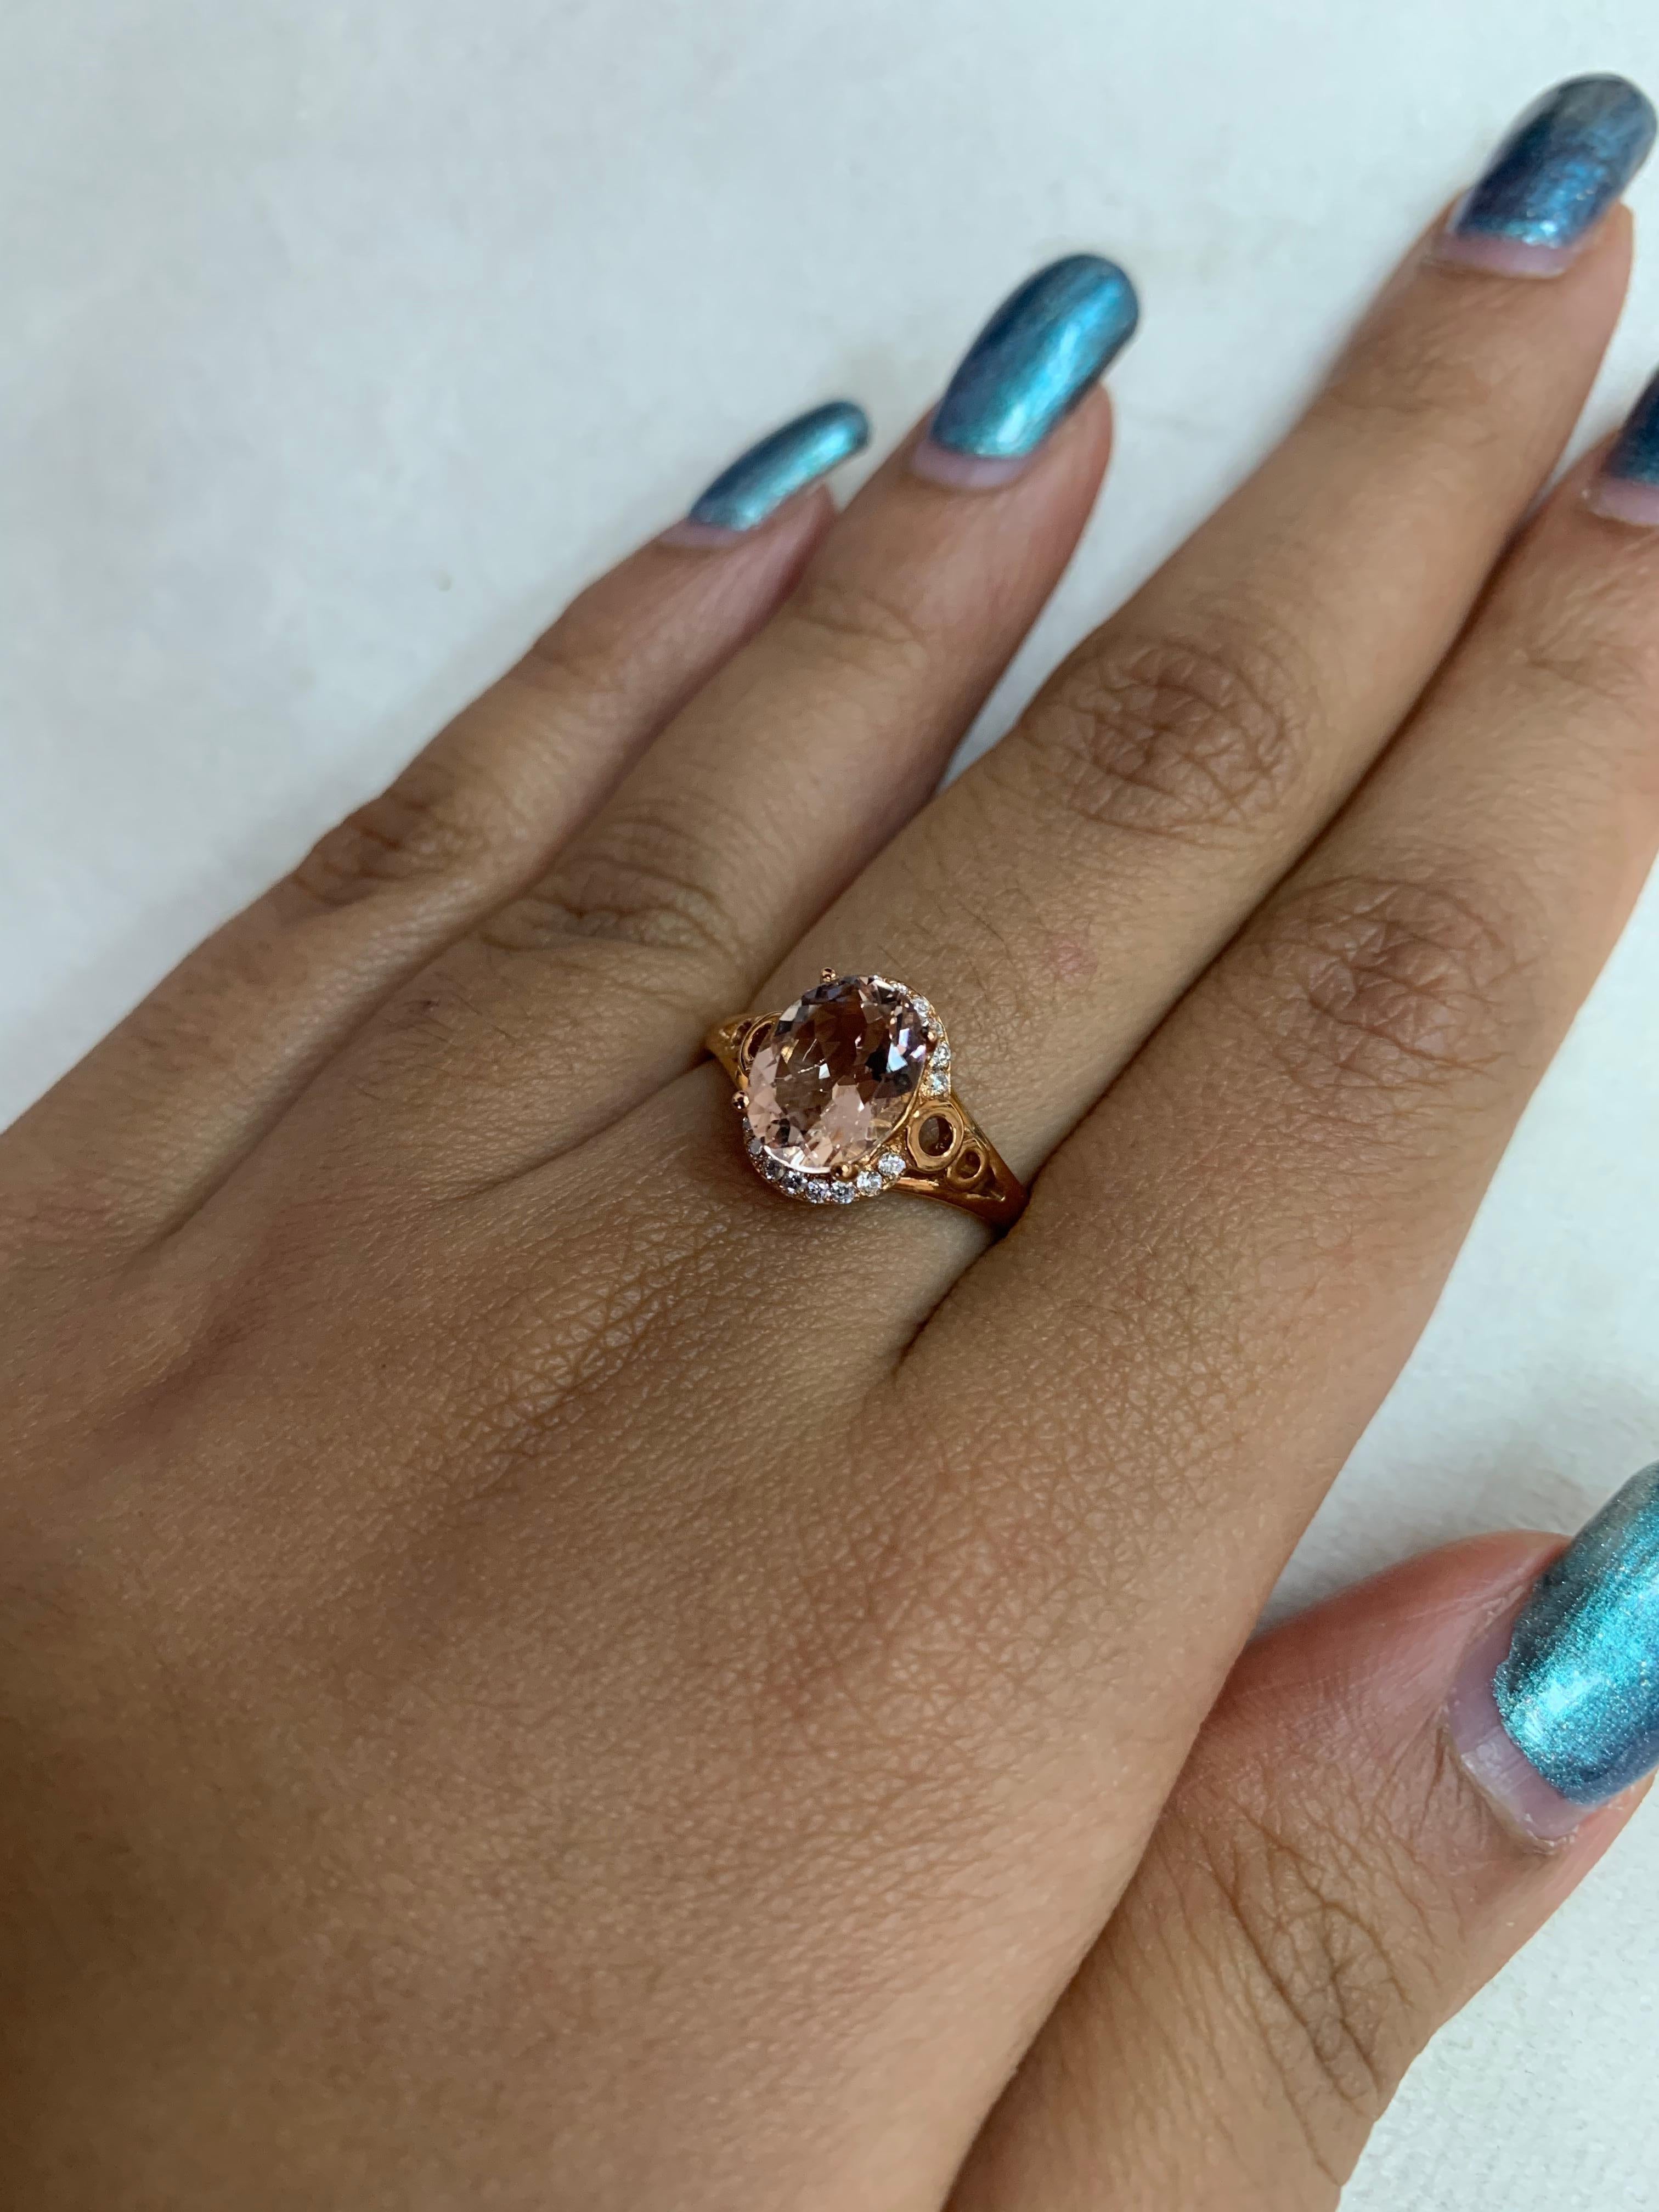 1.7 carat diamond ring